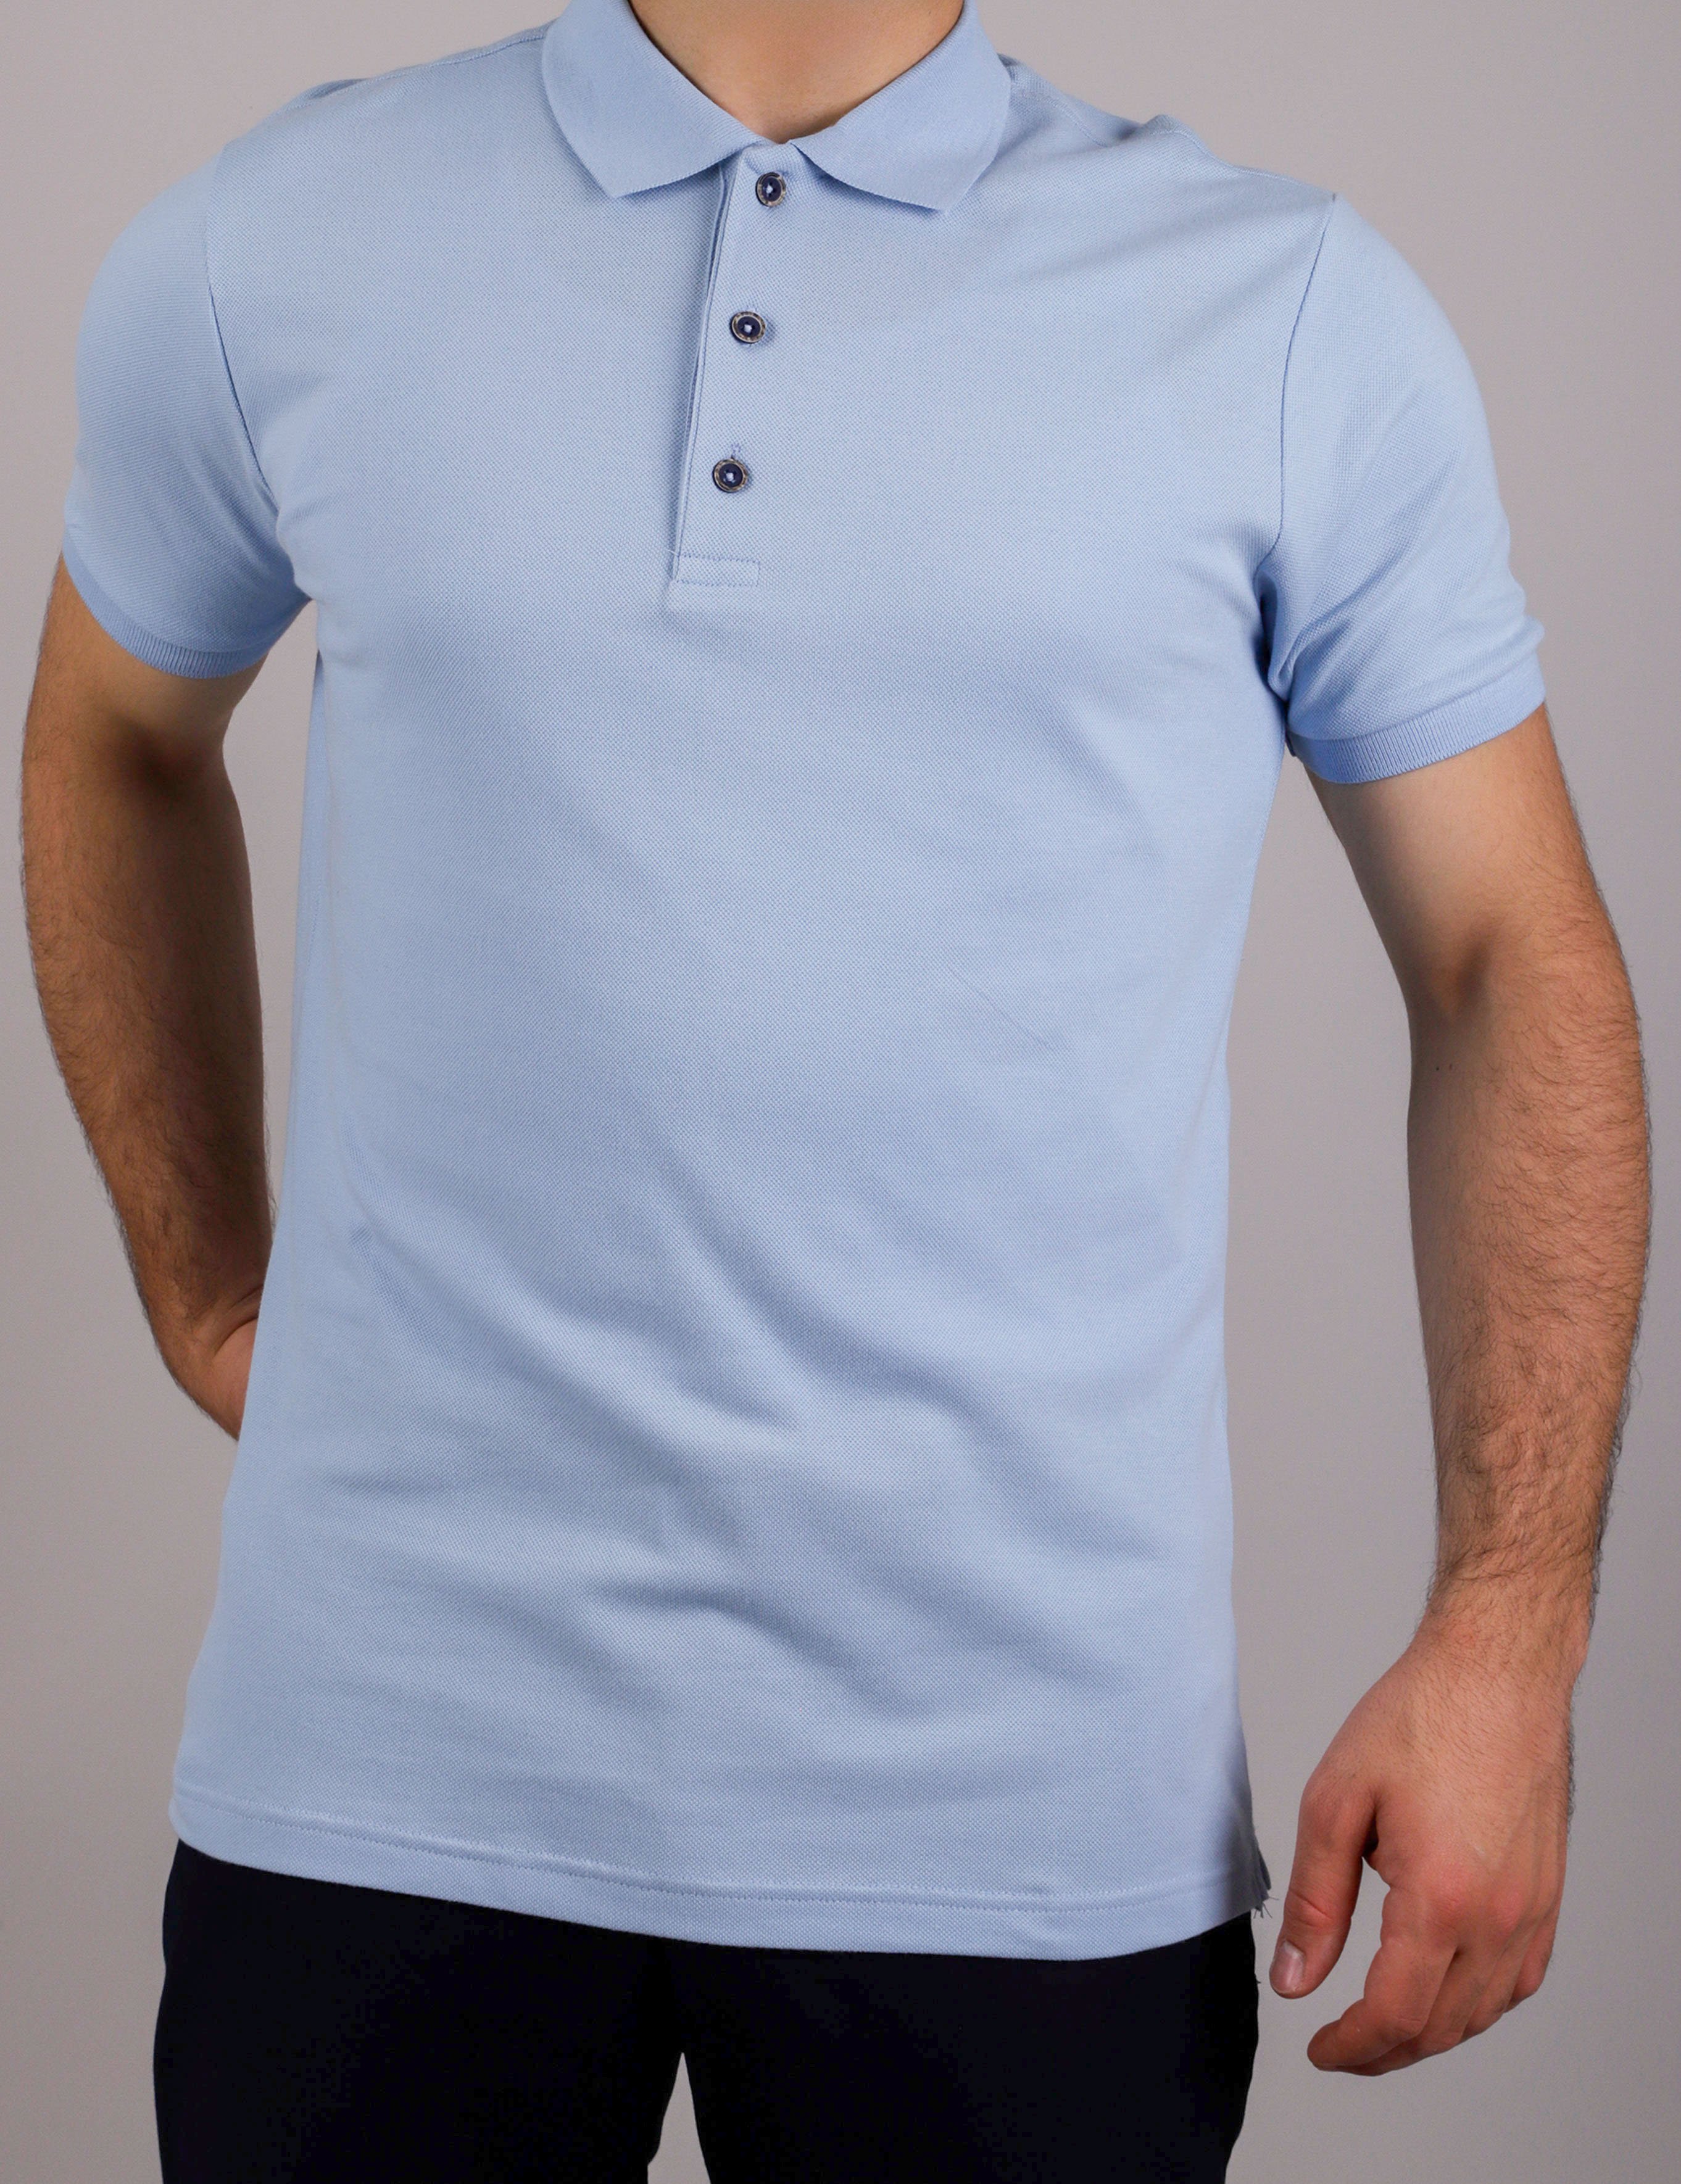 Açık-Mavi Renk Polo Yaka T-Shirt